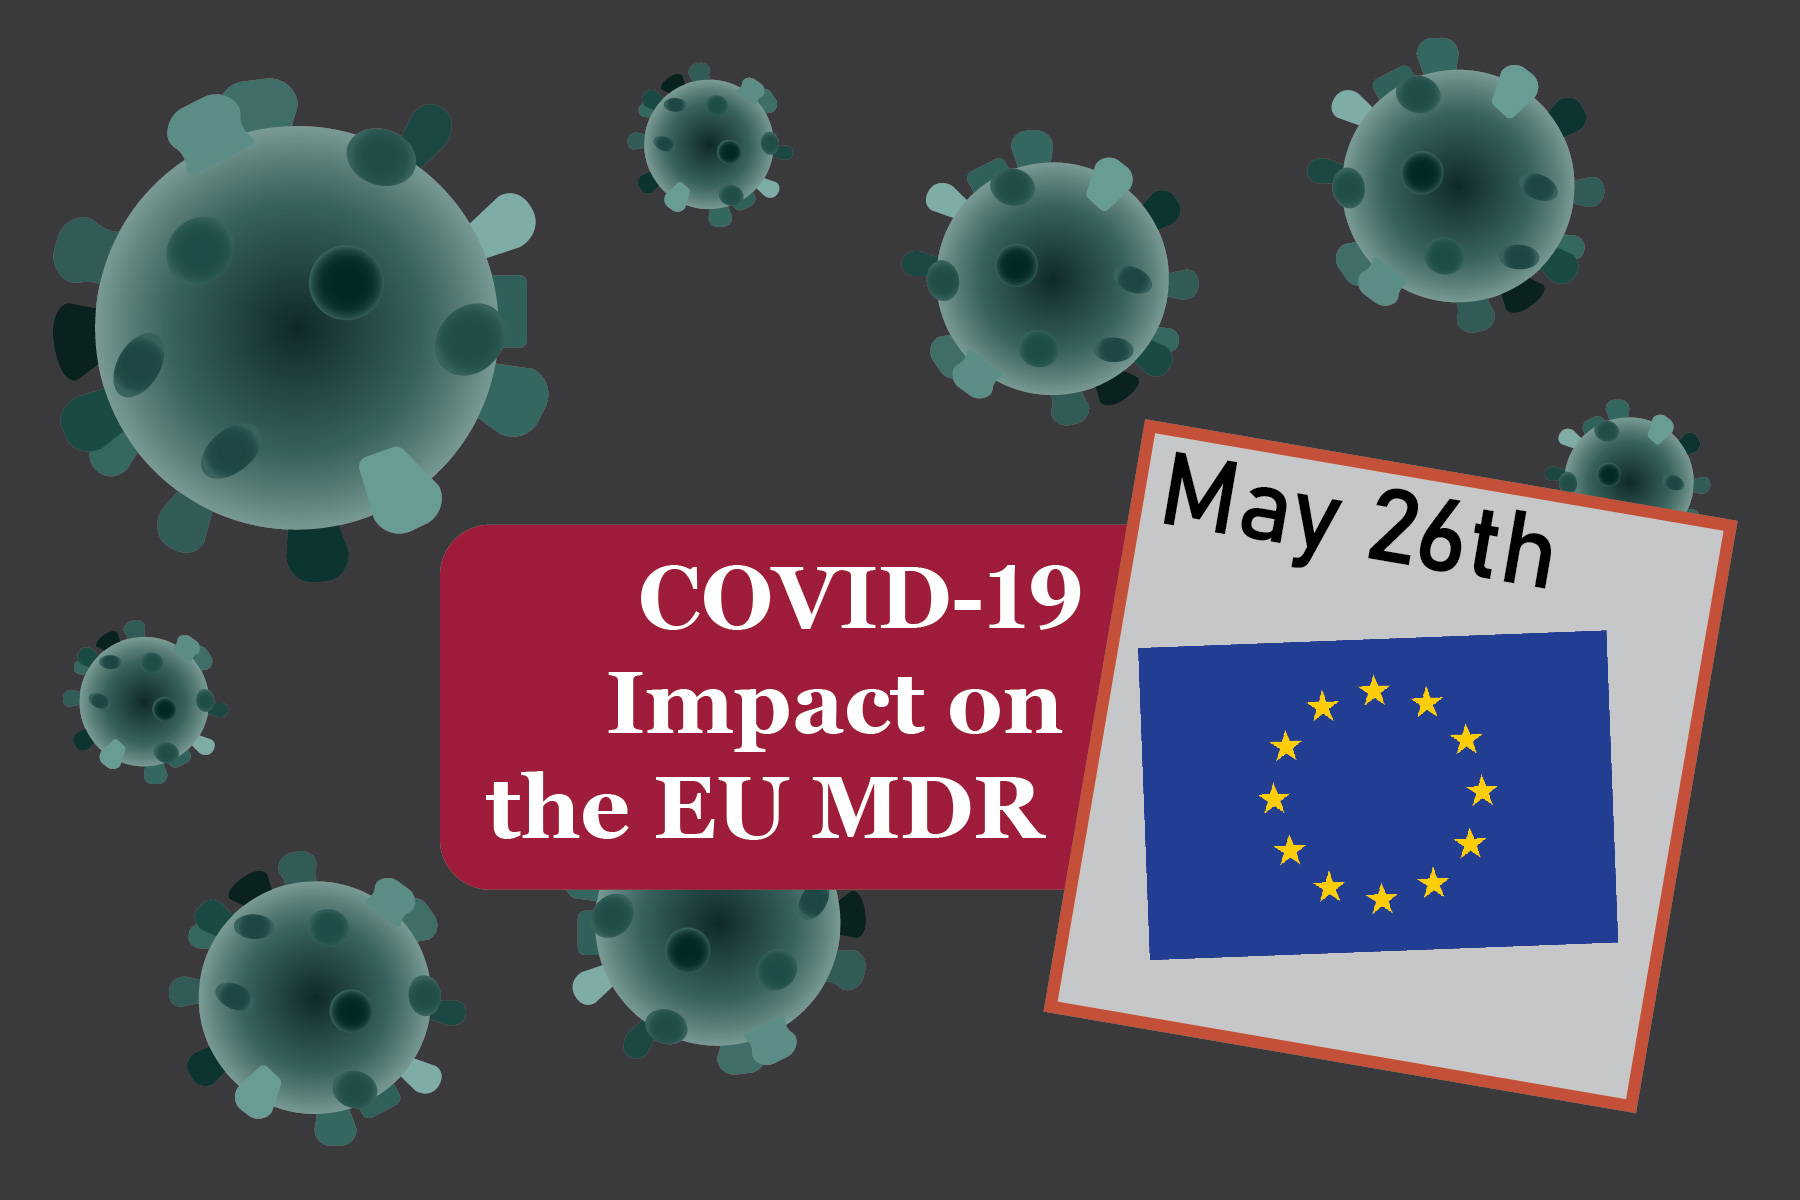 COVID-19 Impact on the EU MDR